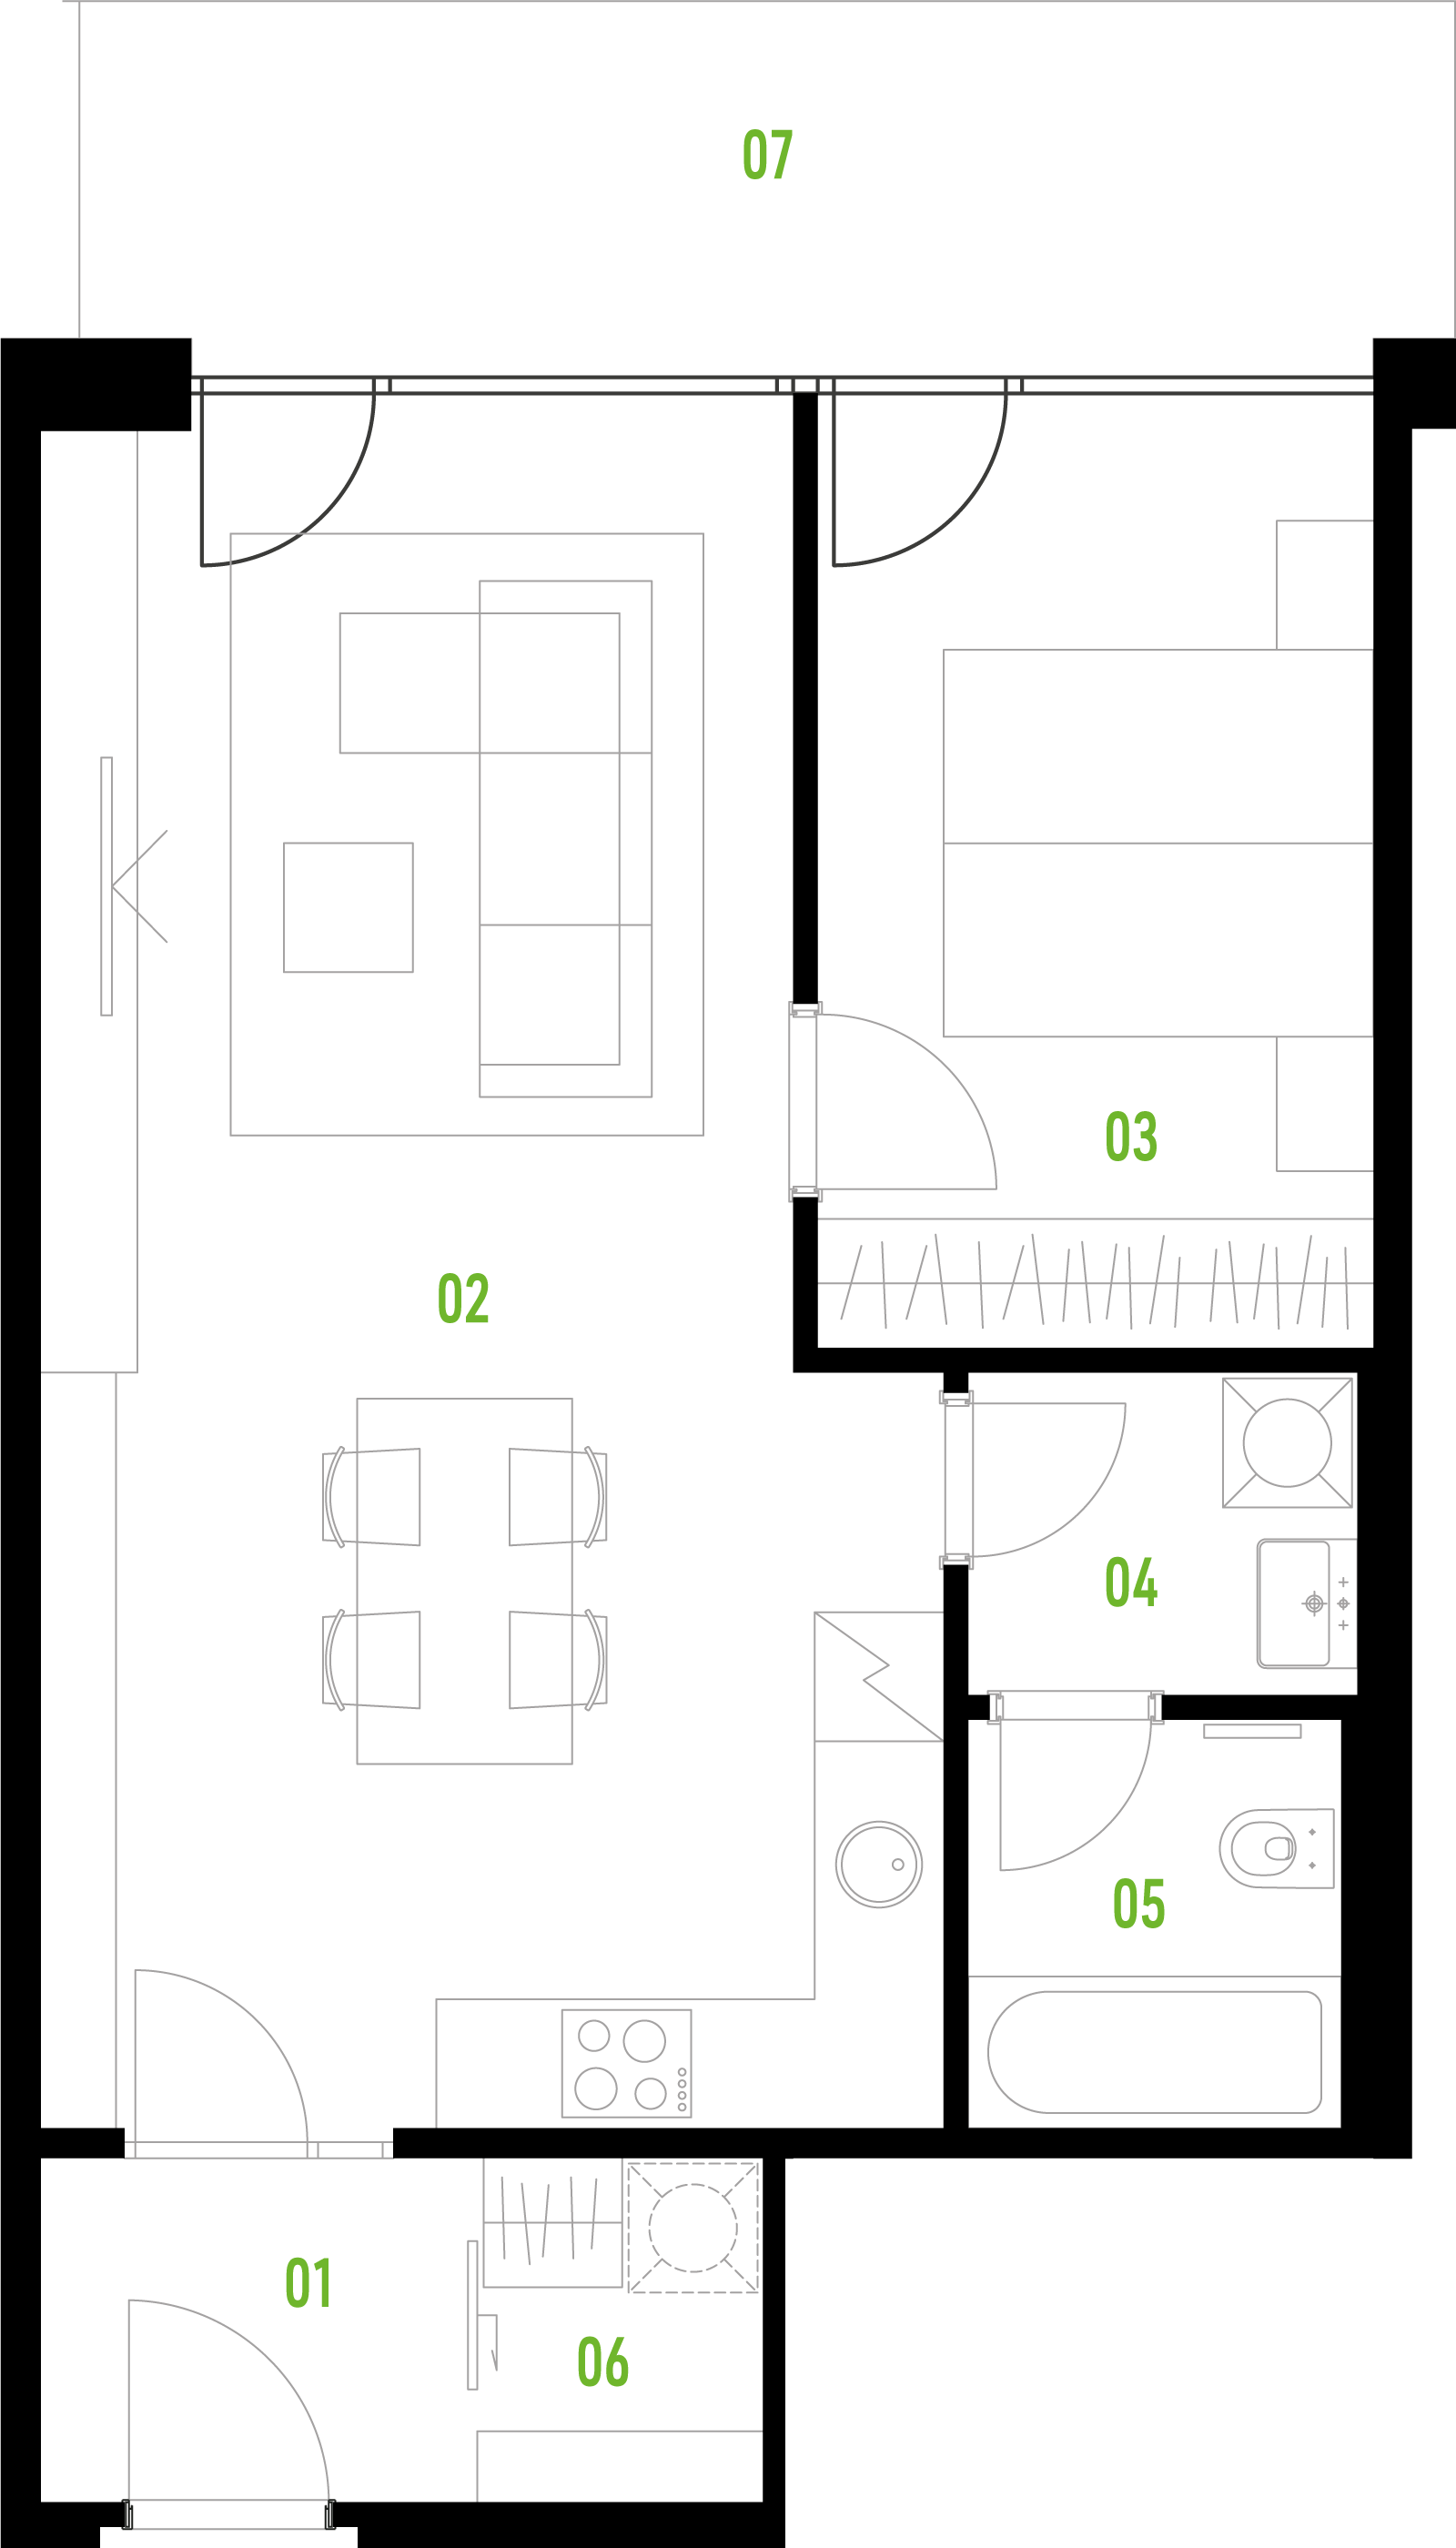 B13 floor plan